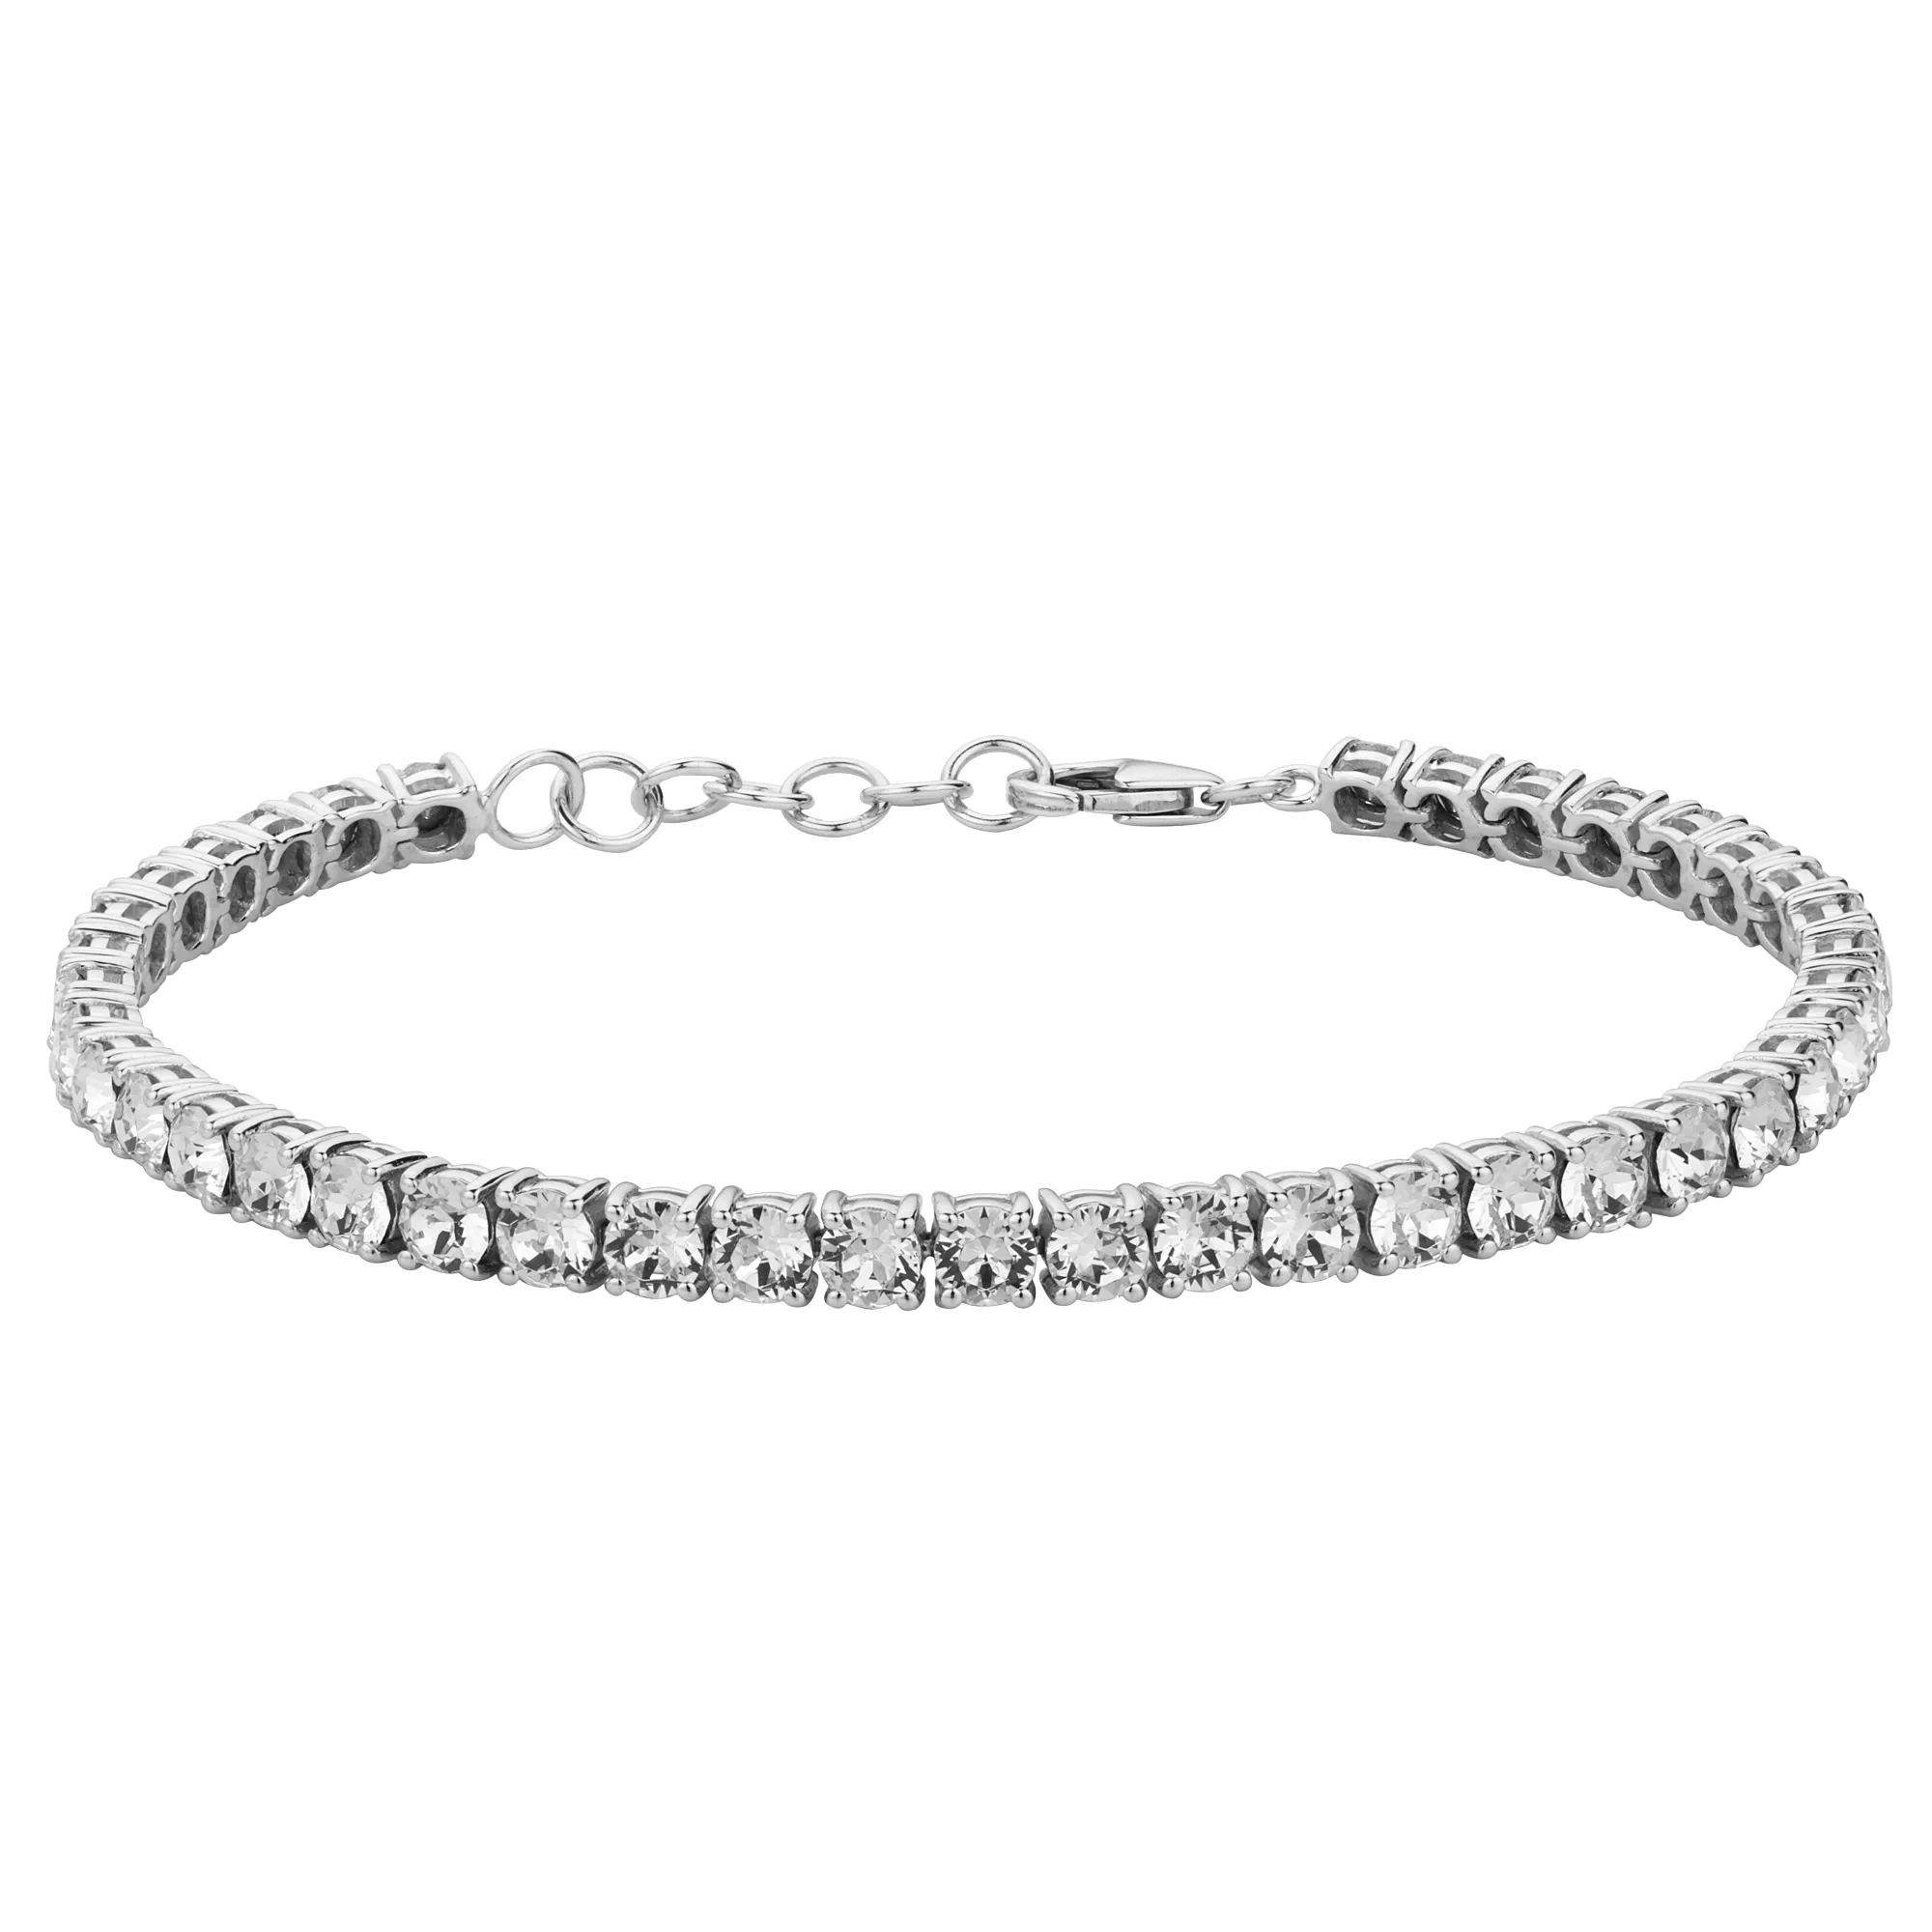 Silver Tennis bracelet